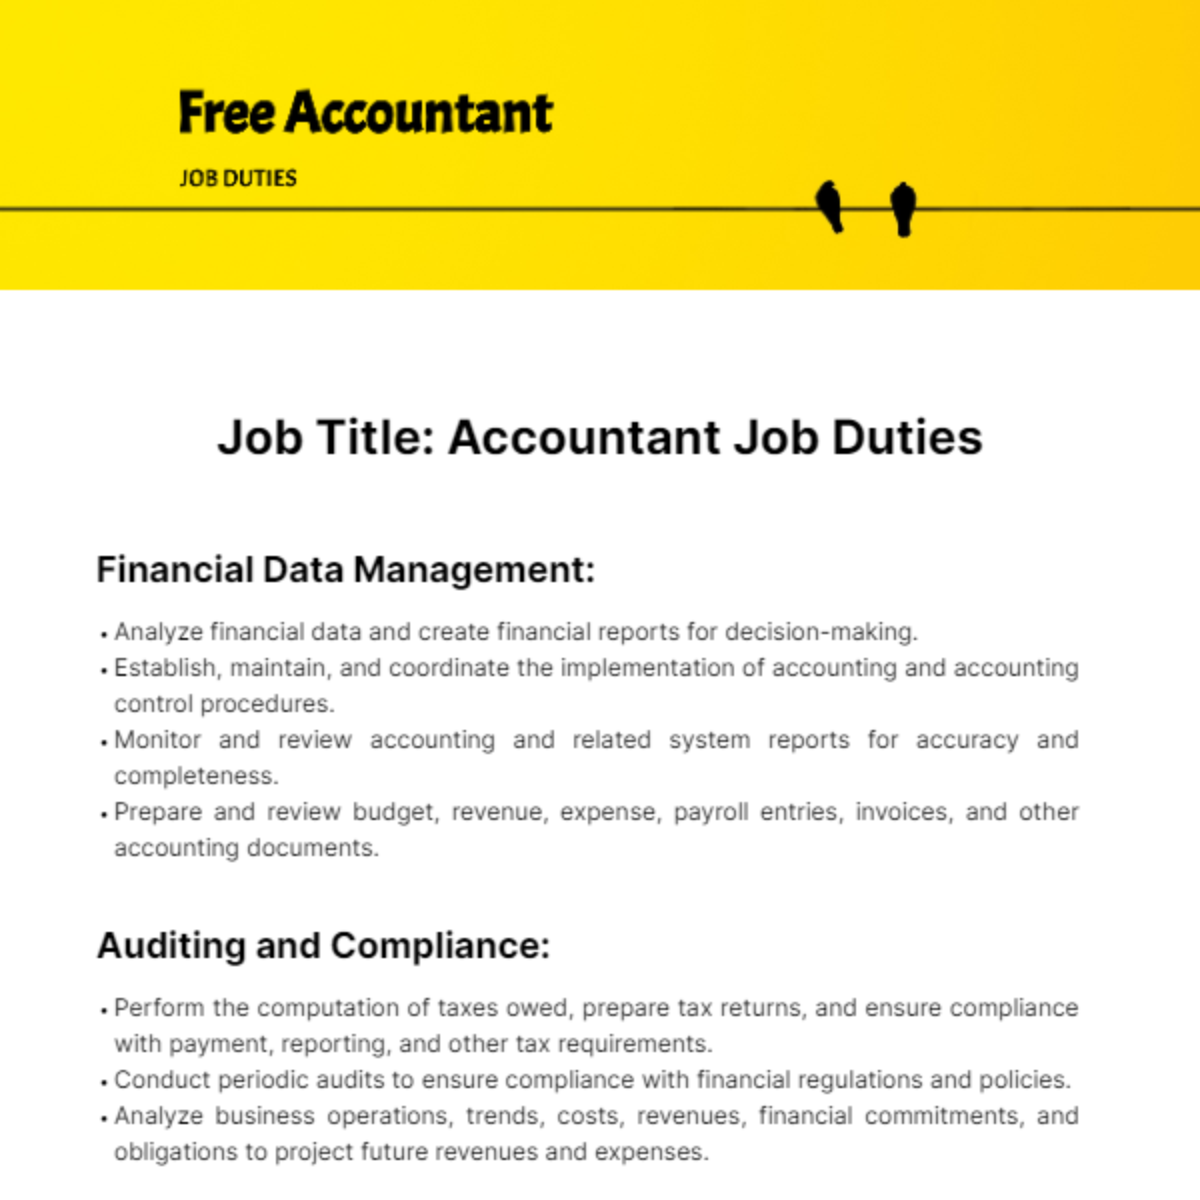 Free Accountant Job Duties Template